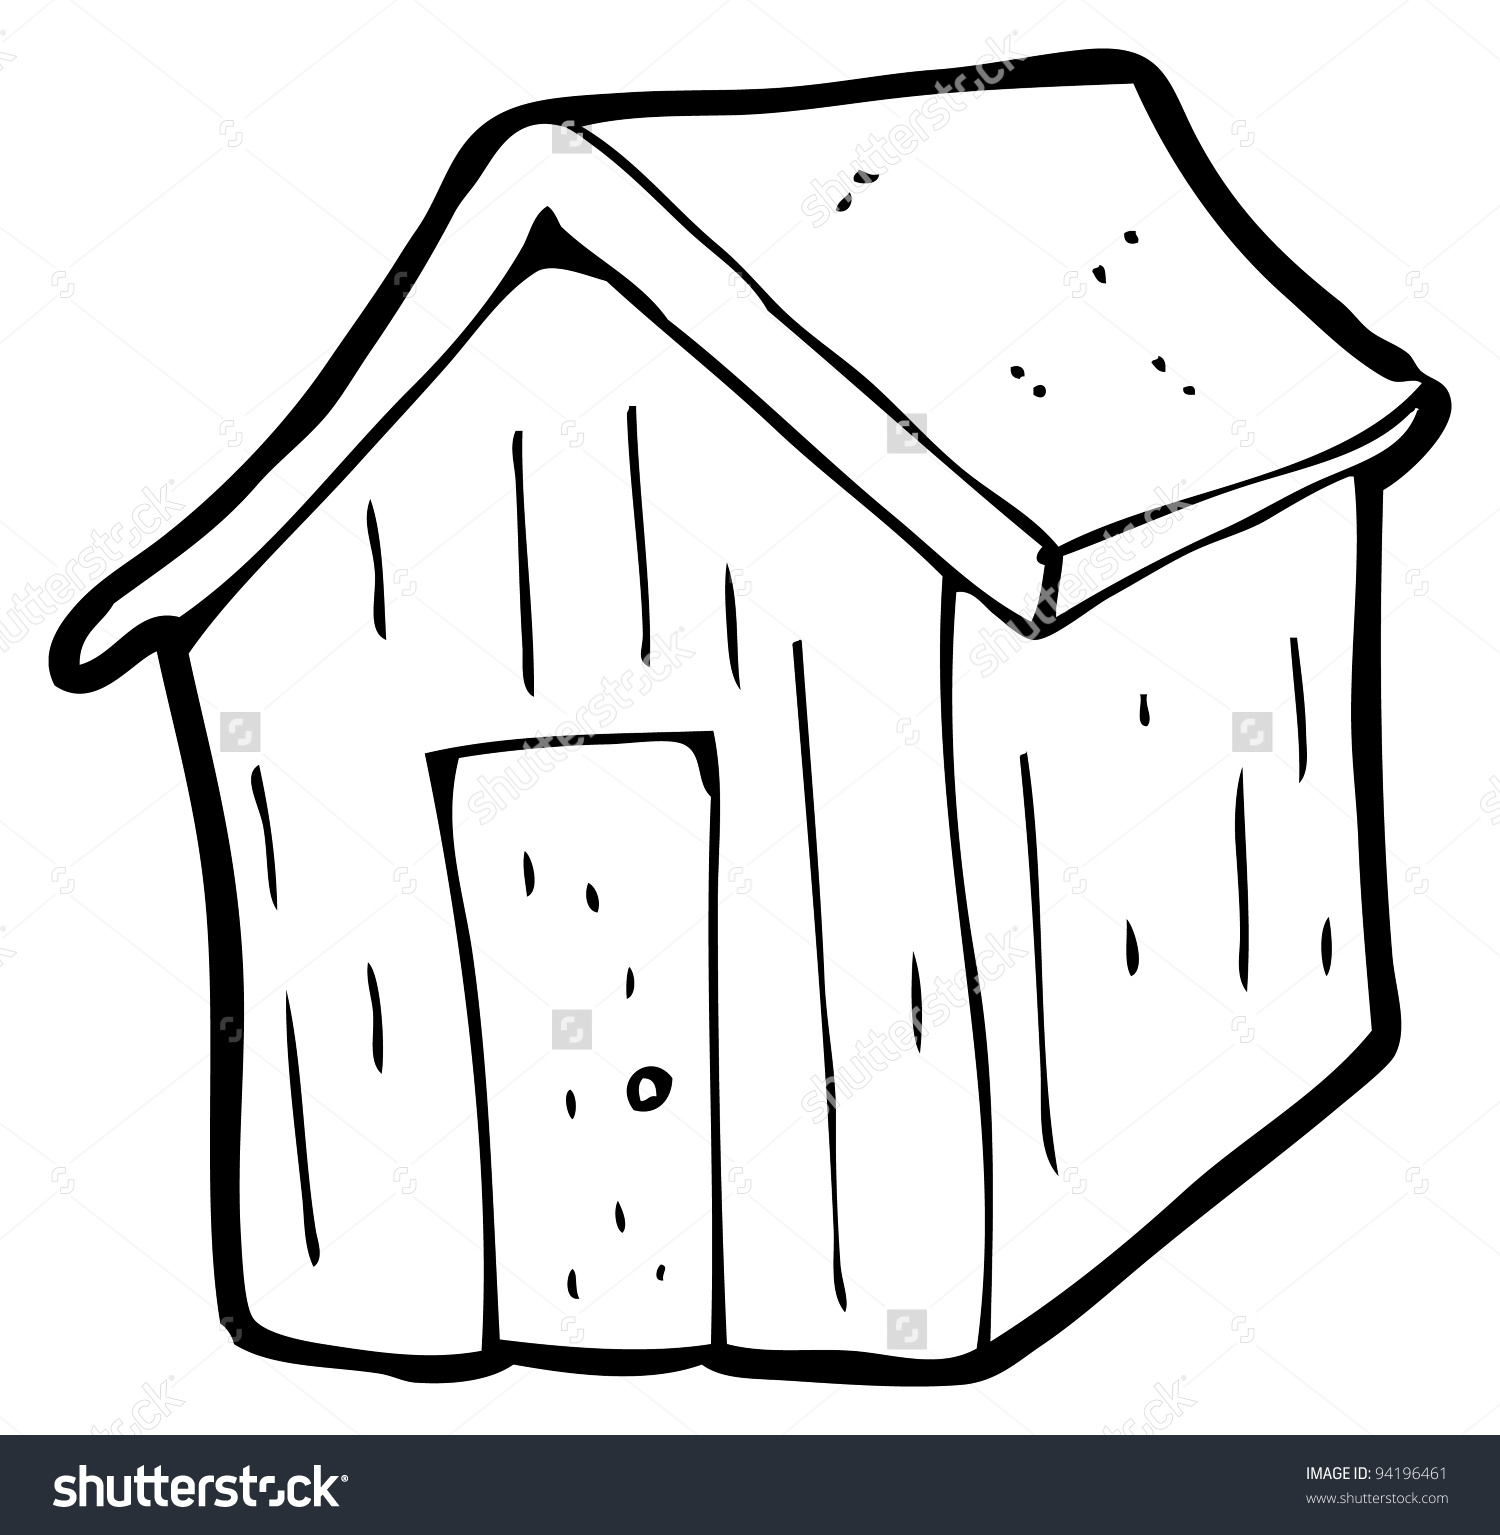 hut clipart black and white